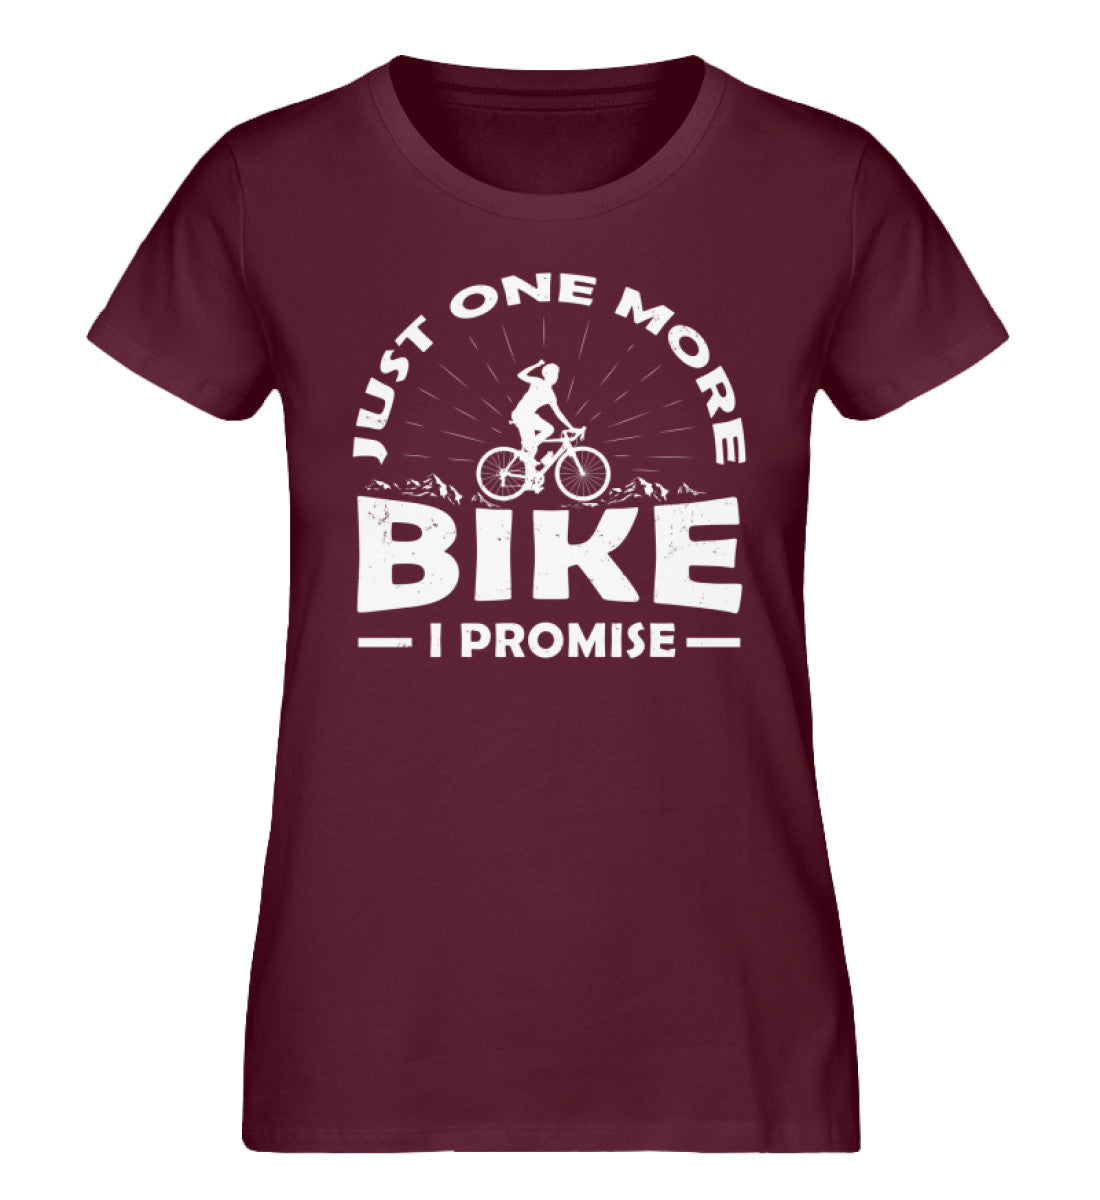 Just one more bike, i promise - Damen Organic T-Shirt fahrrad Weinrot